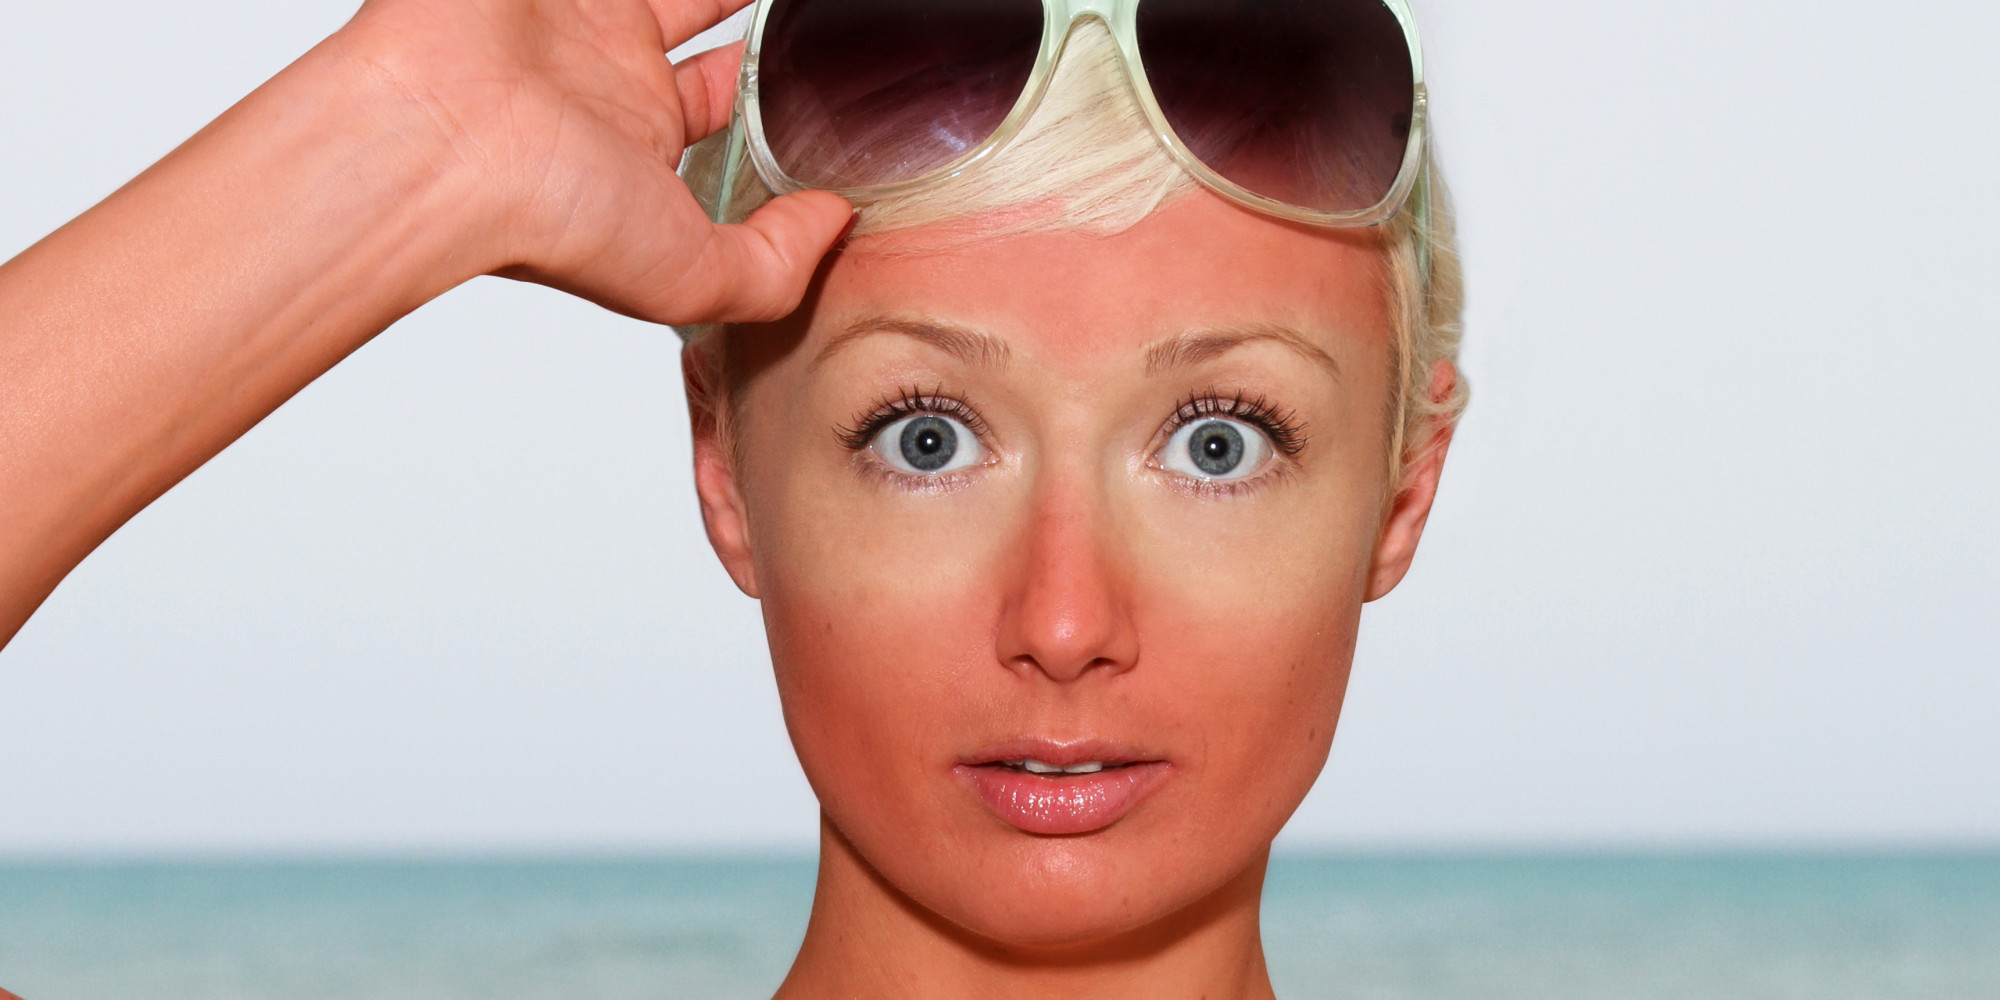 Woman raises her sunglasses revealing her sunburn